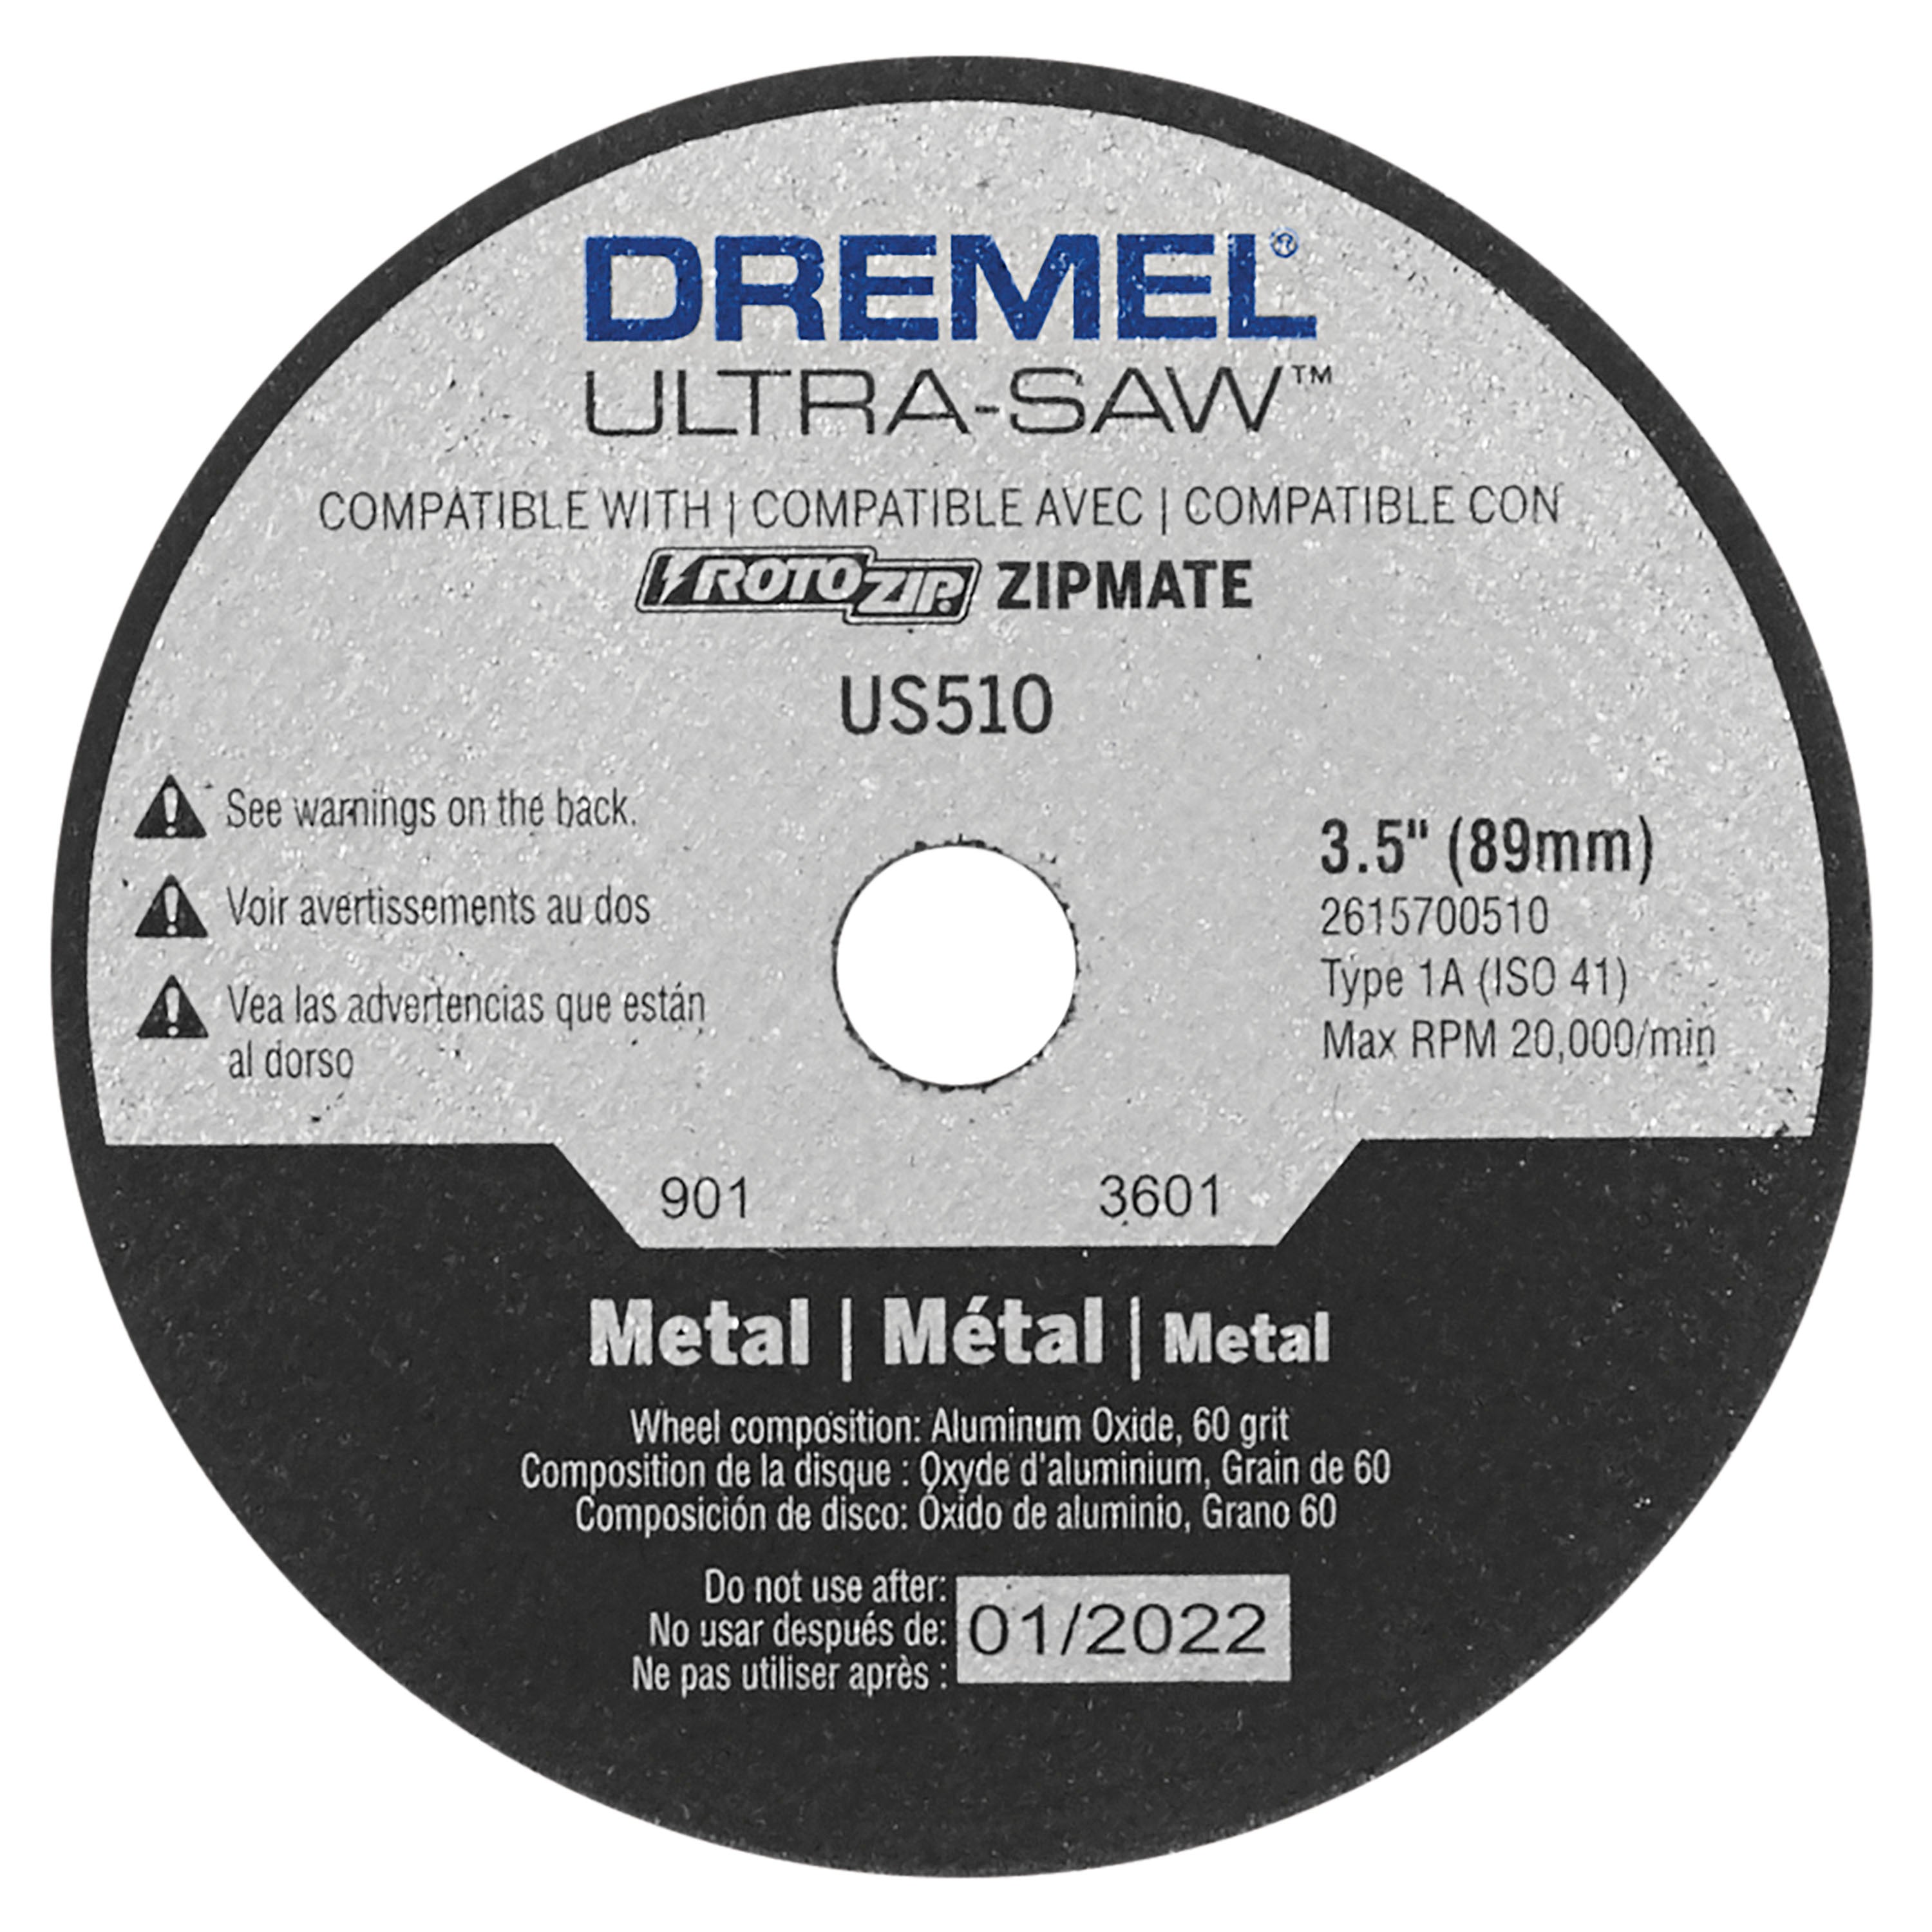 Dremel US700 - 6pc Ultra-Saw Blade Set